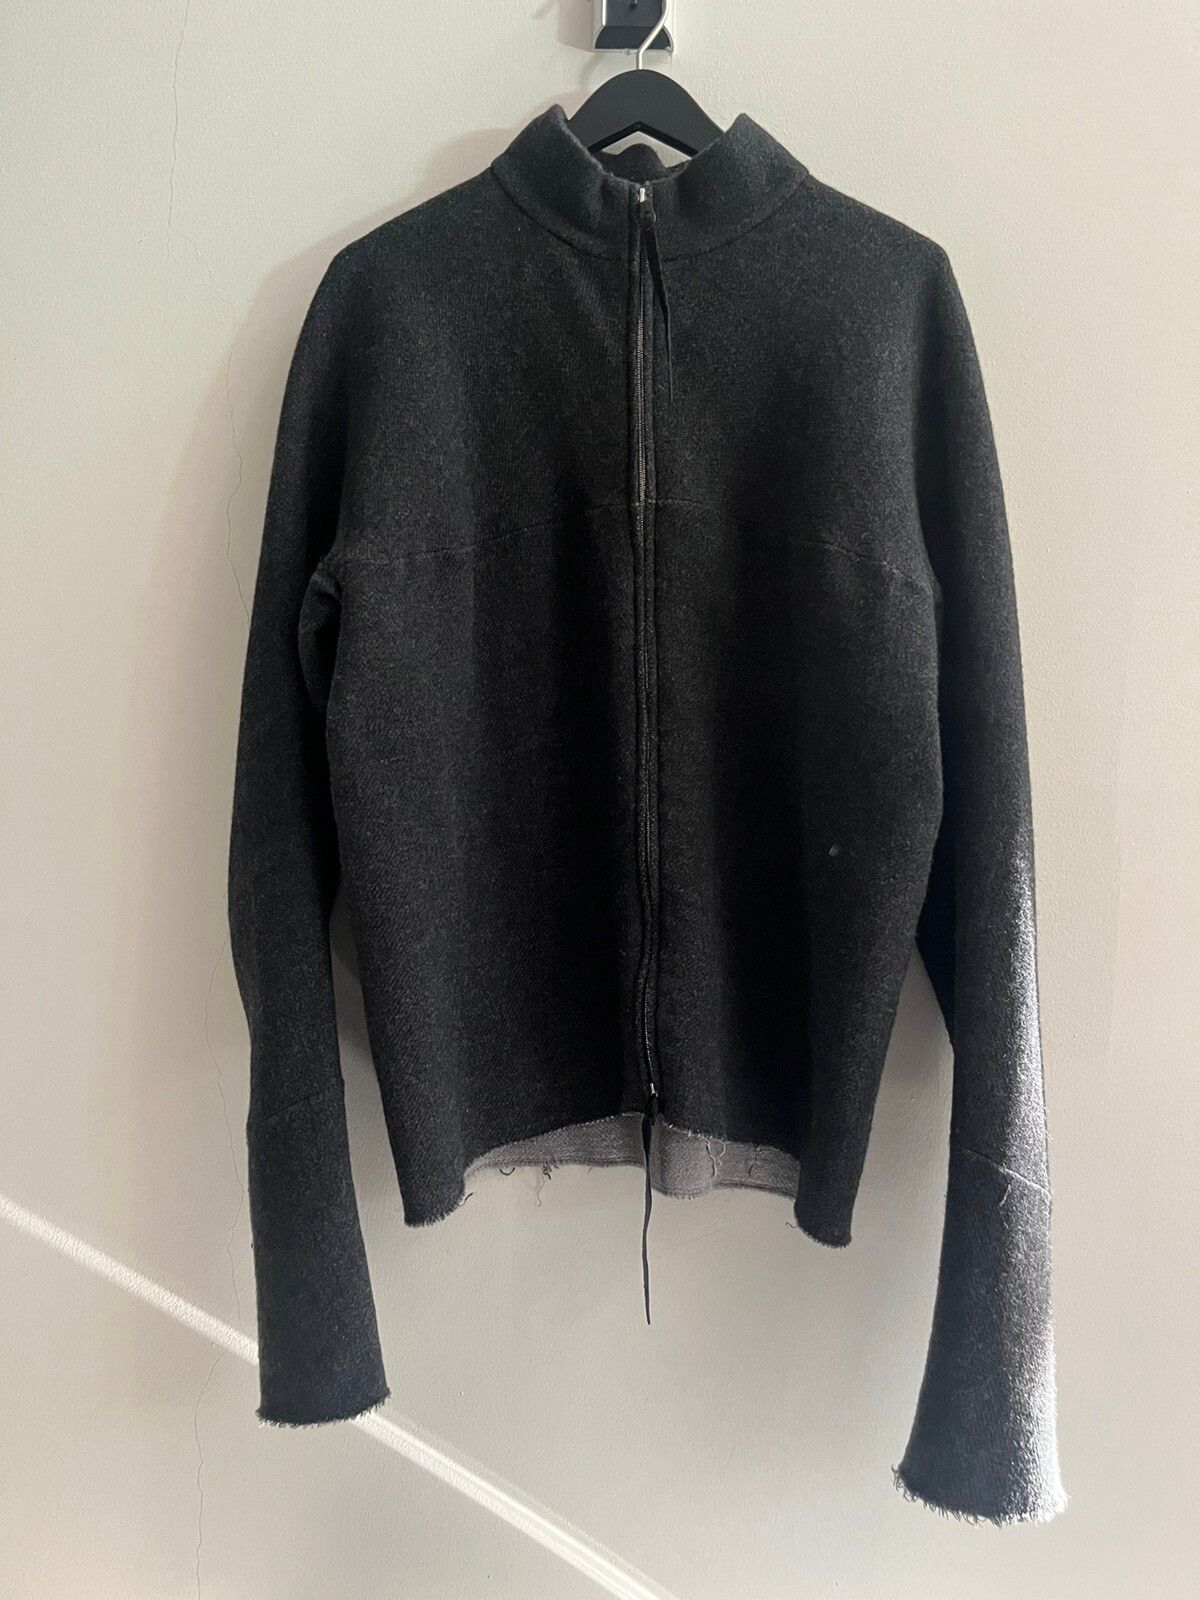 Ma+ Ma+ Jacket grey size 50 | Grailed